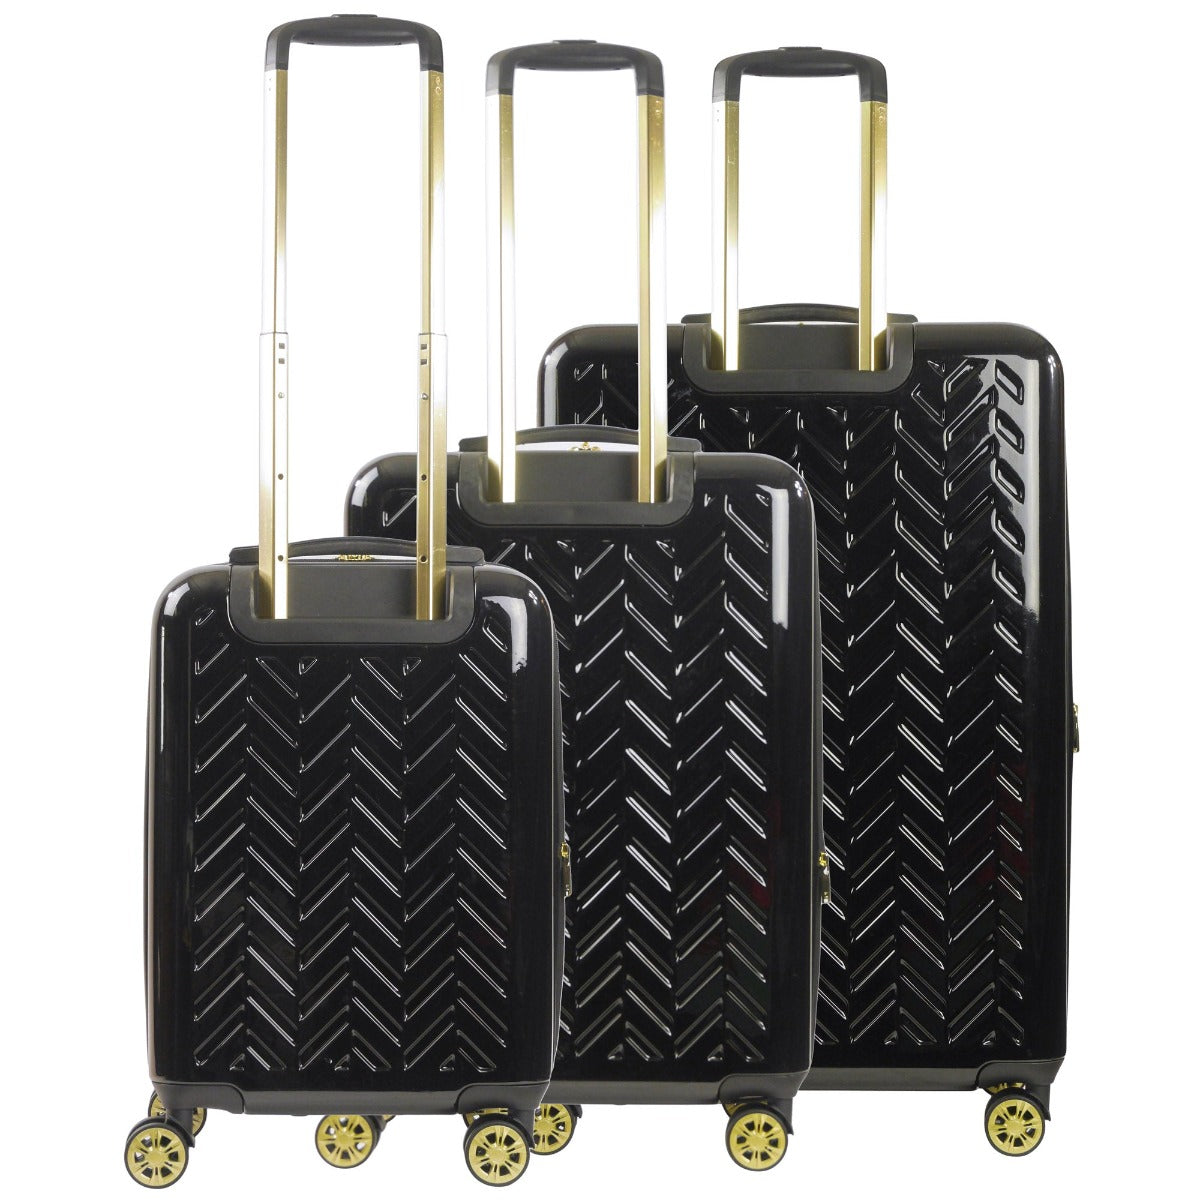 Ful Groove Hardside Spinner 3 PC Luggage Set, Black